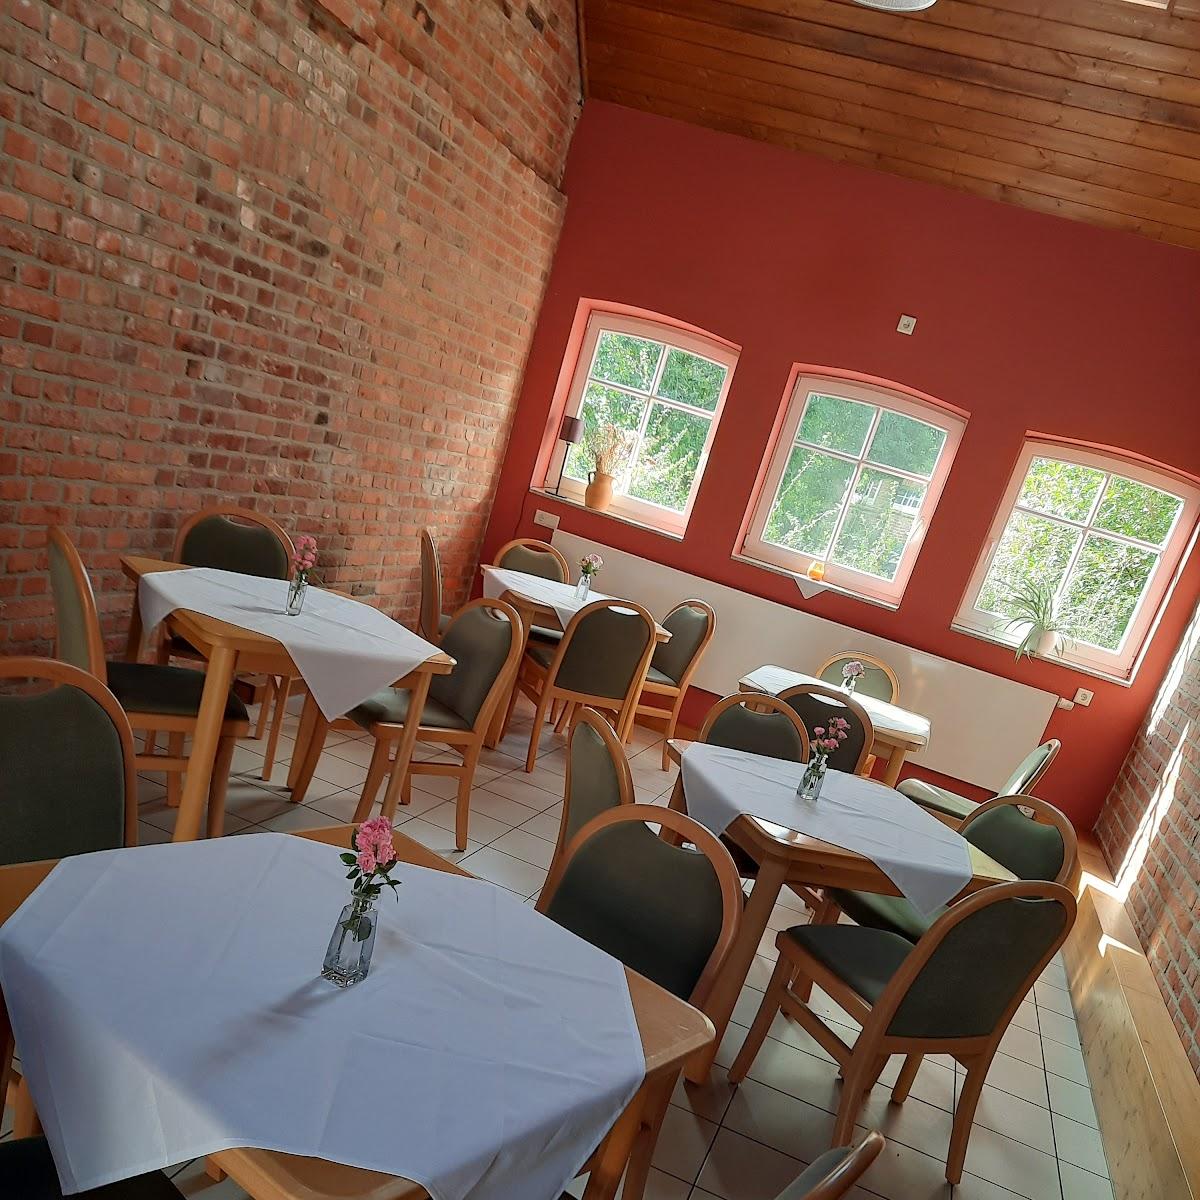 Restaurant "AuenCafe - Das Ausflugslokal" in Xanten